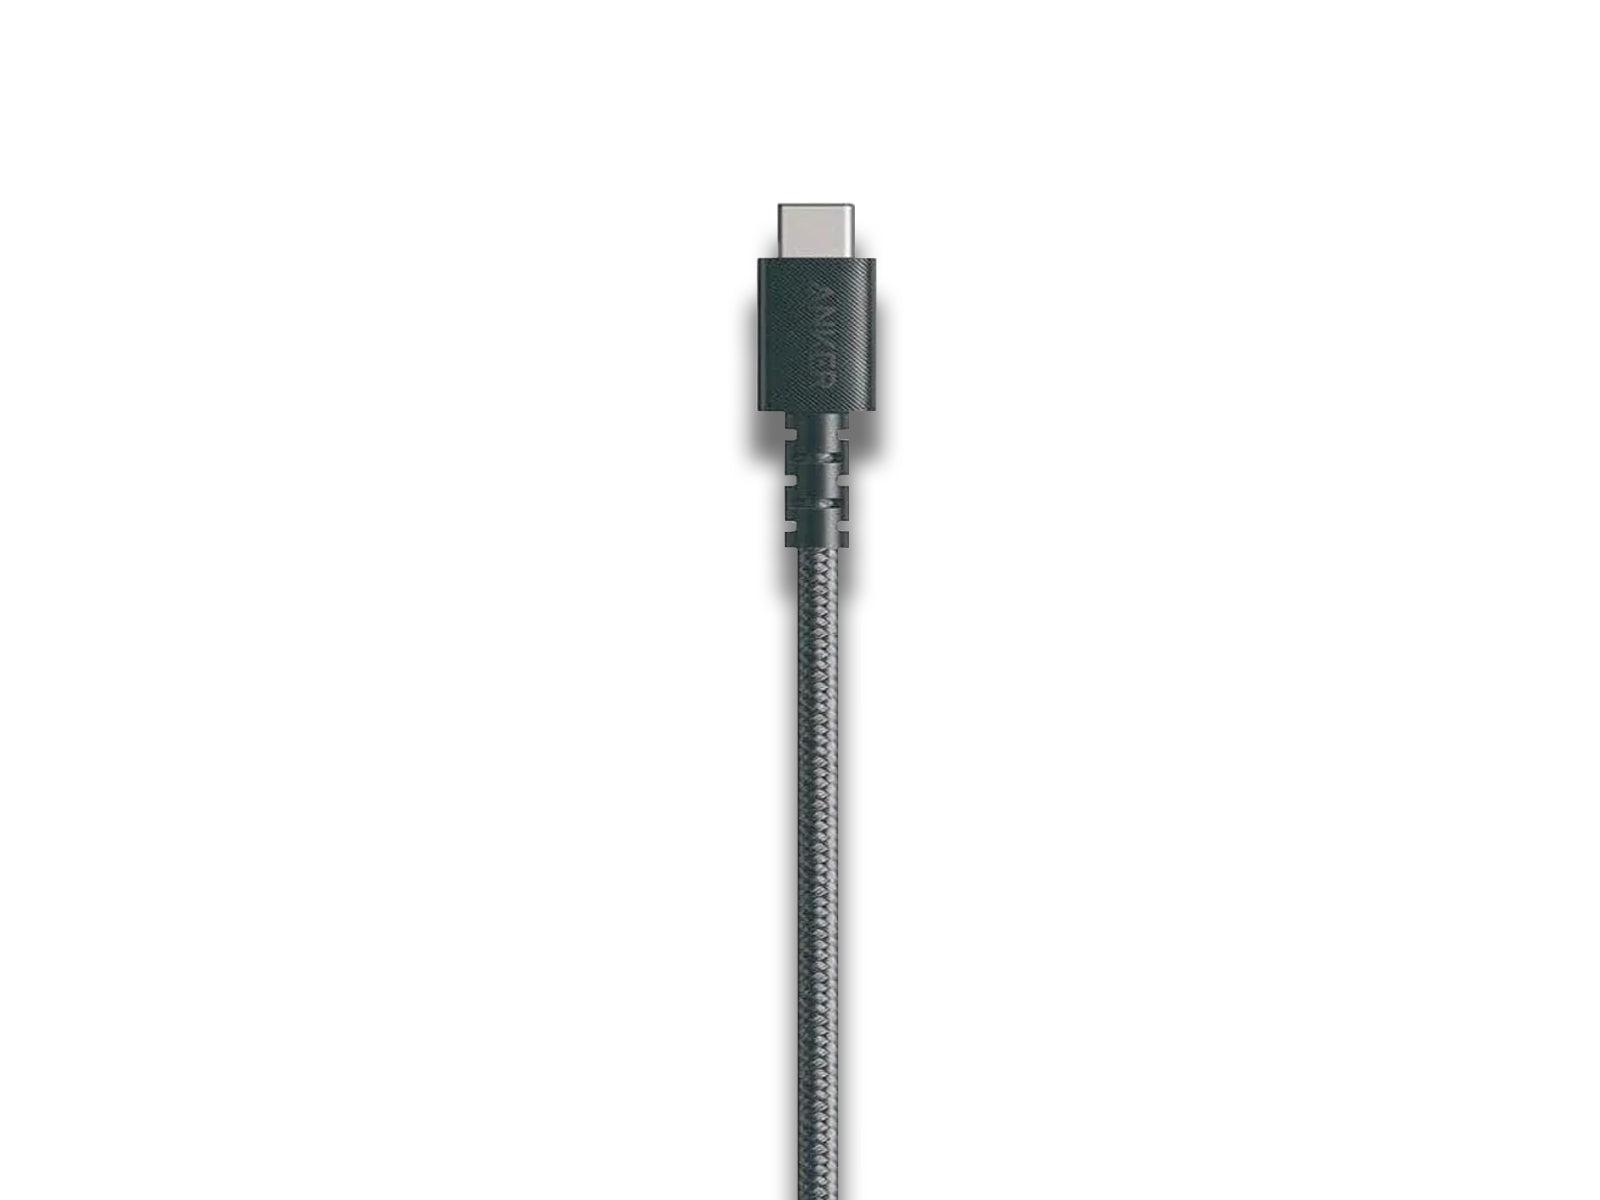 Anker-Powerline-USB-A-to-USB-C Type C Port